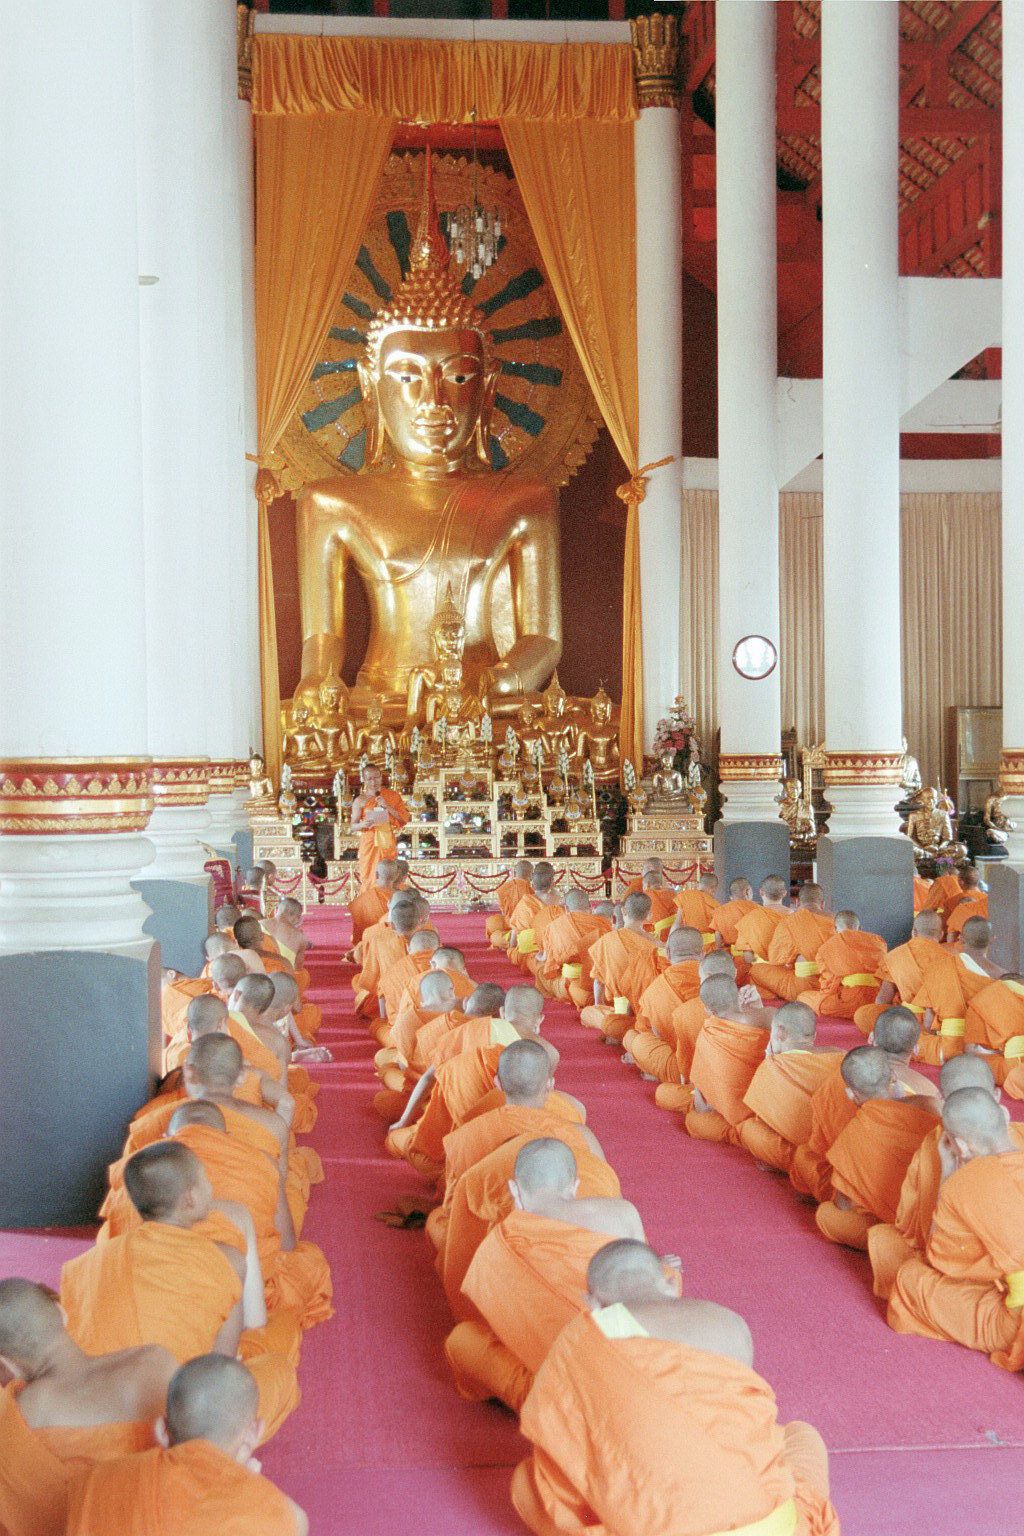 Temple in Chang Mai Thailand - Mar 2003